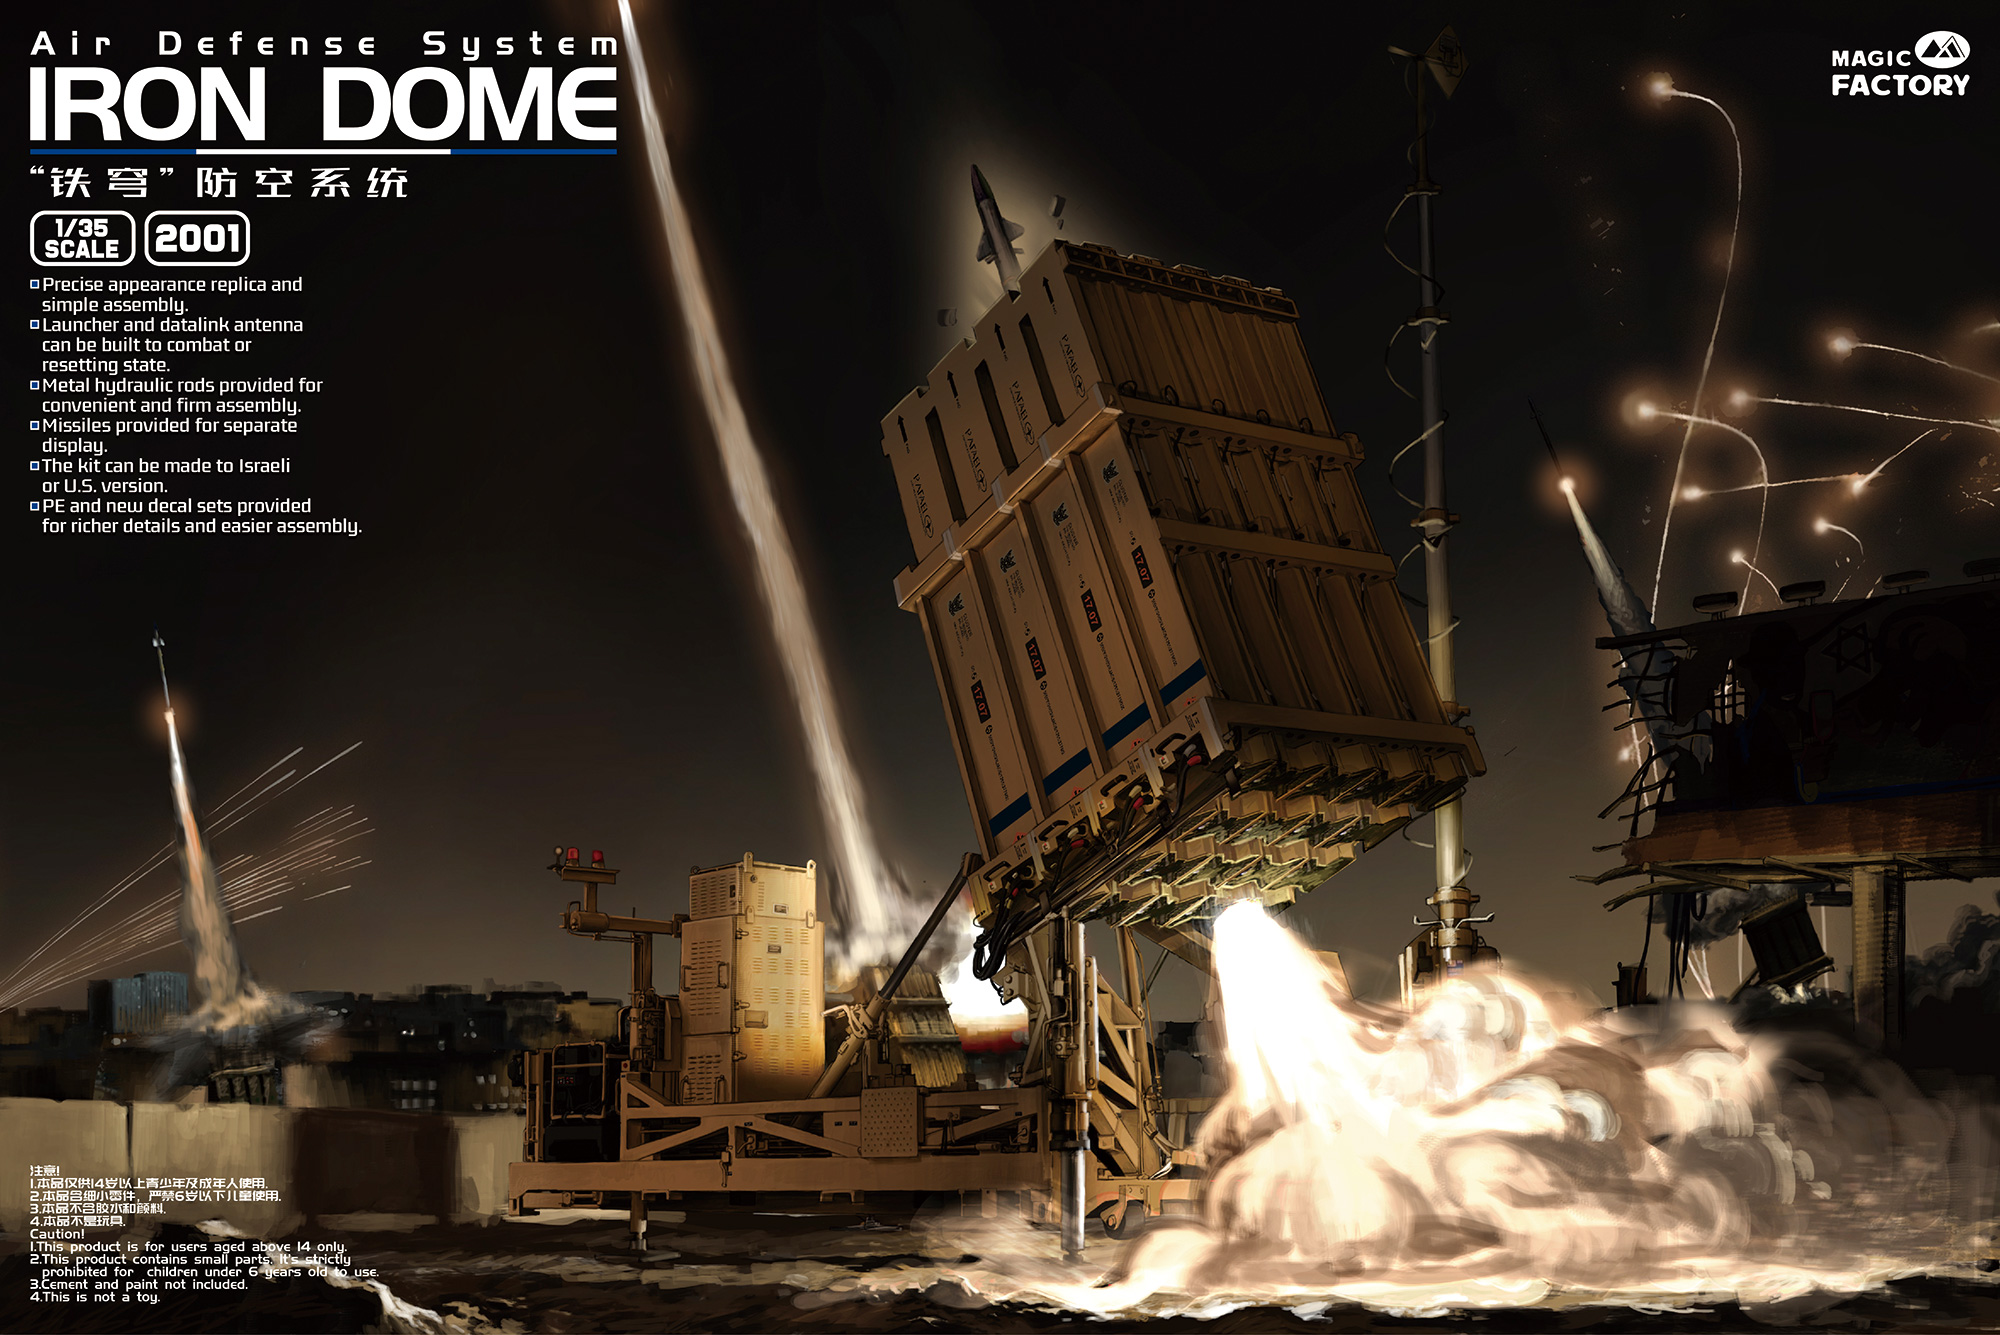 Fotografie 1/35 Air Defense System "Iron Dome"